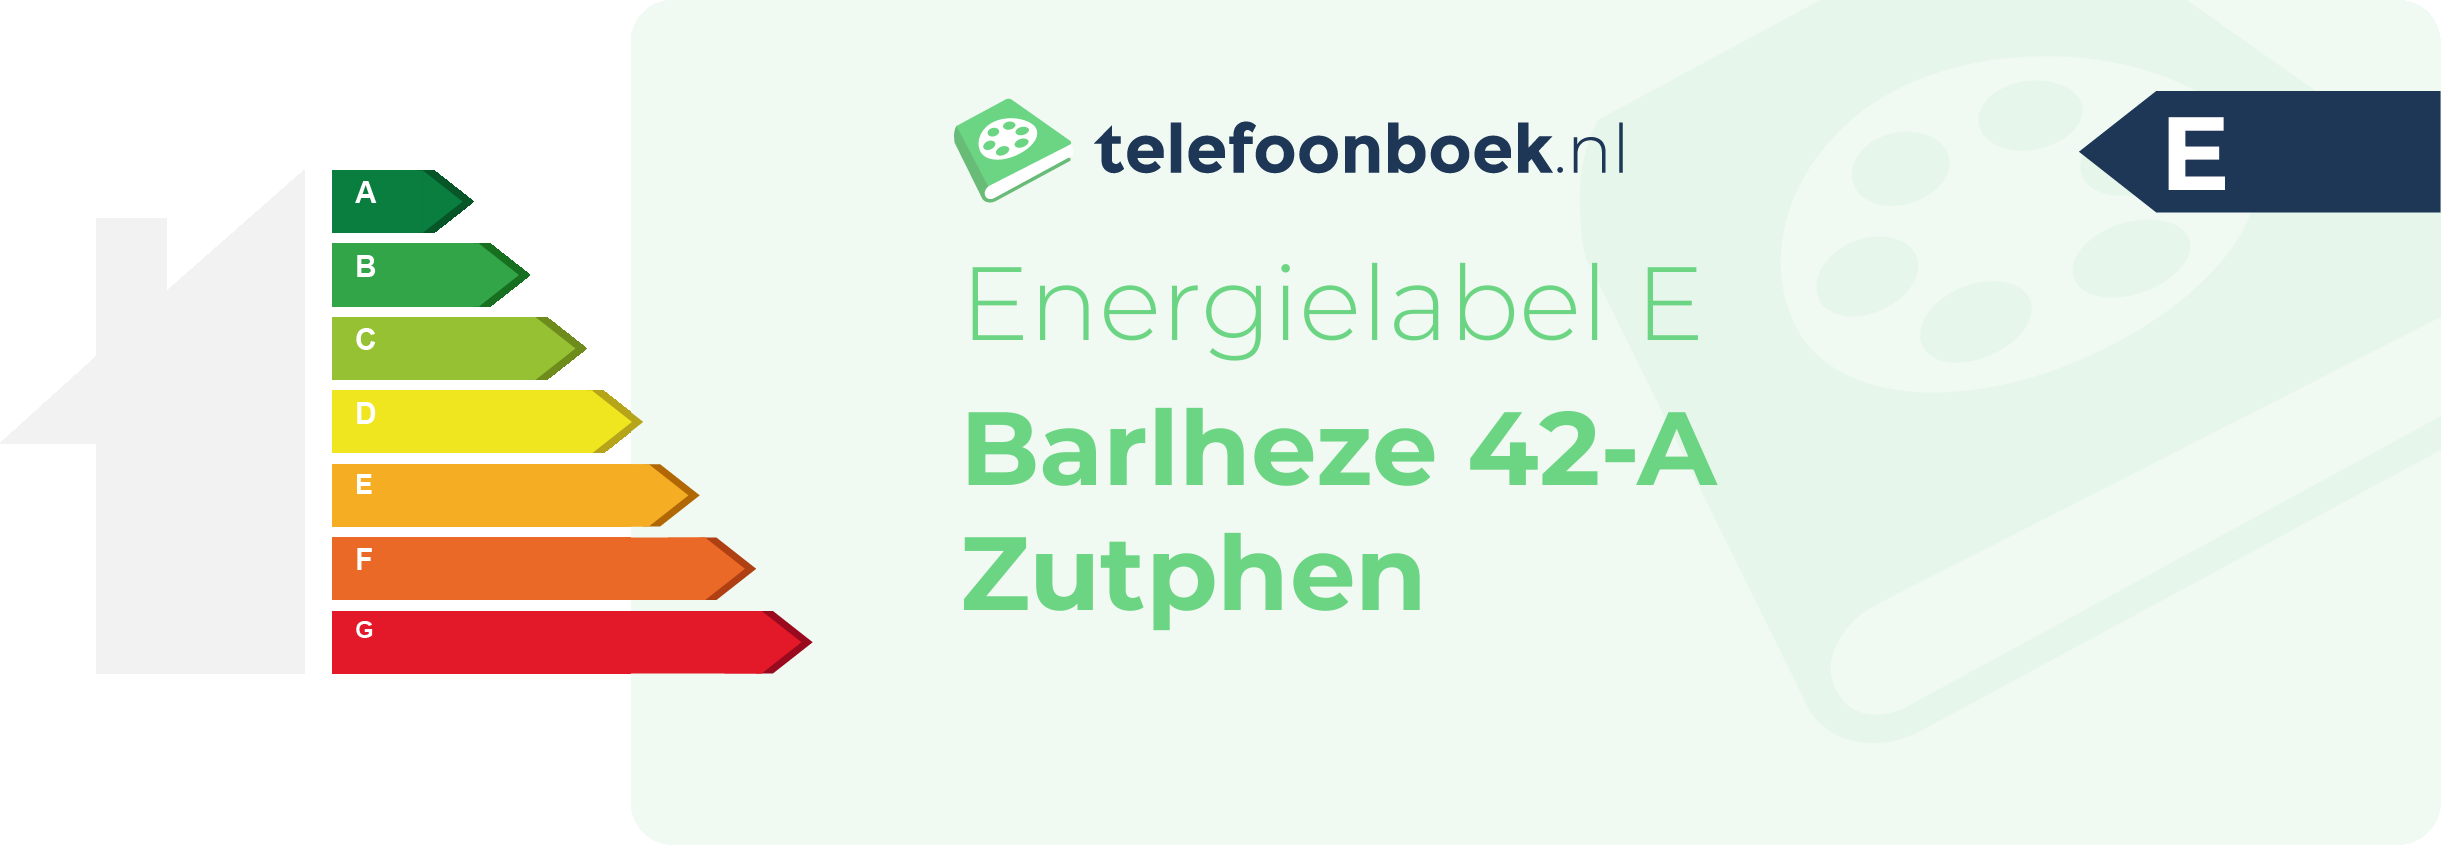 Energielabel Barlheze 42-A Zutphen